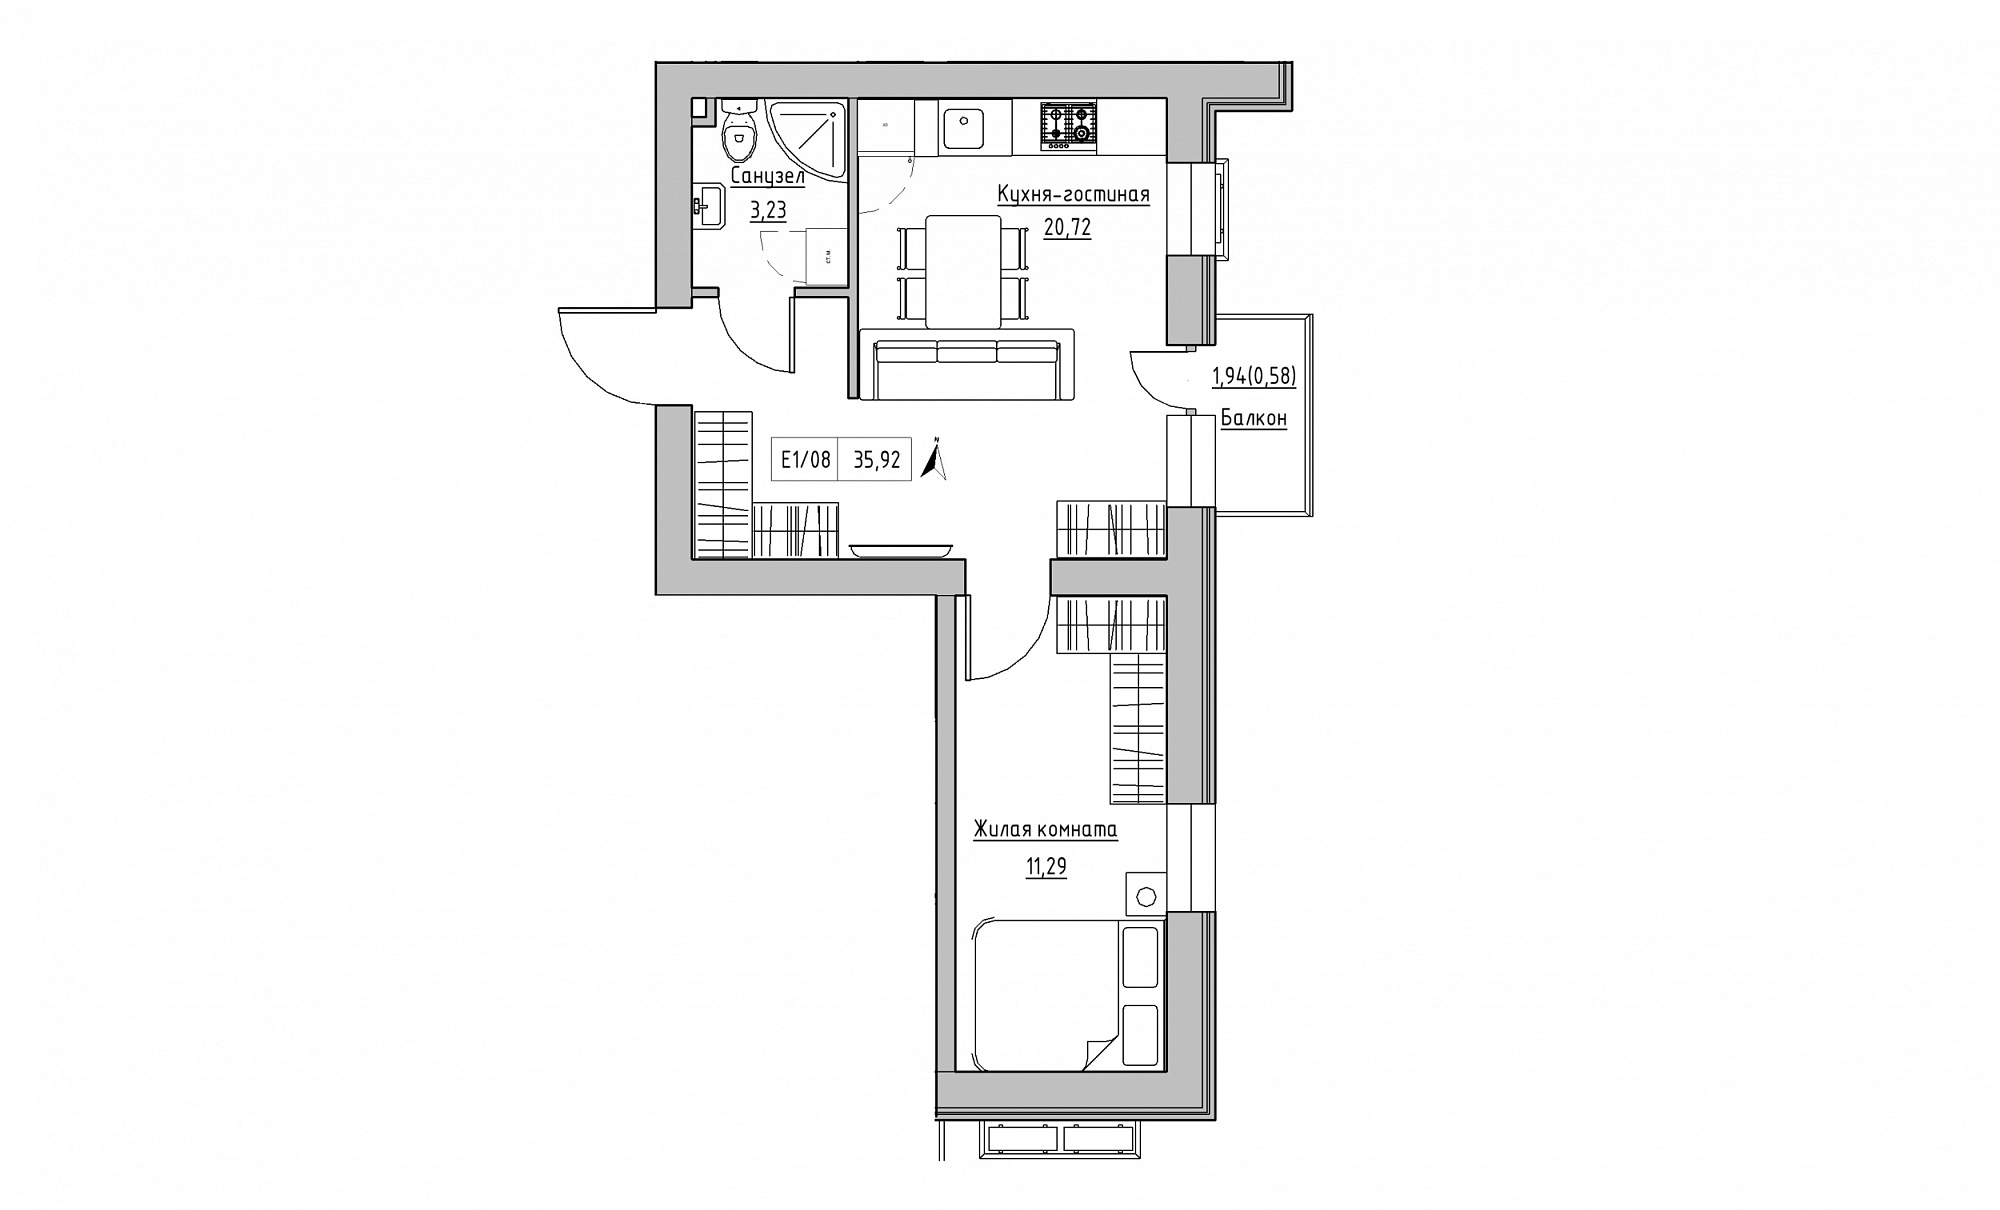 Planning 1-rm flats area 35.92m2, KS-015-04/0007.